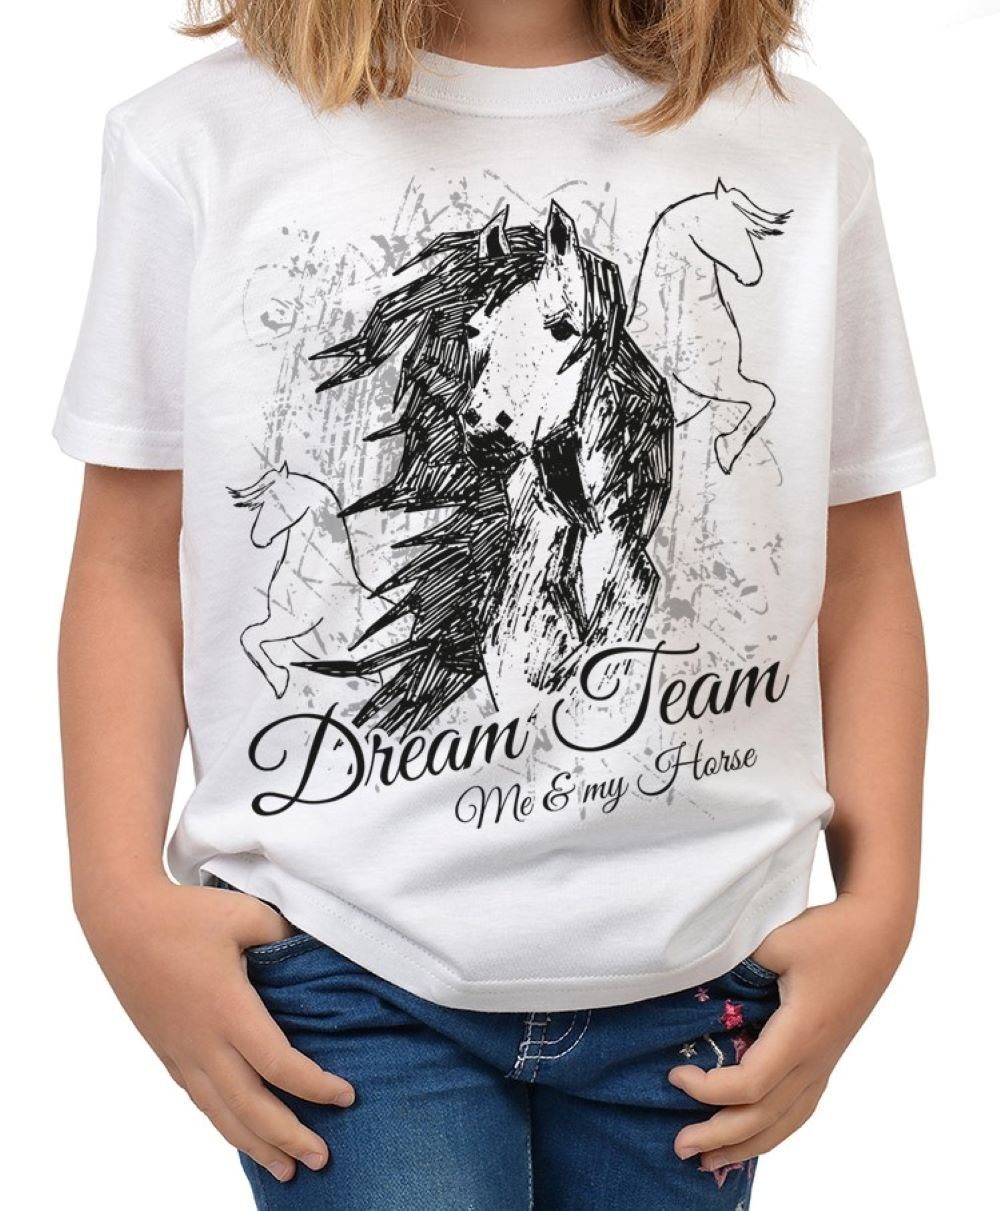 Tini - Shirts T-Shirt Mädchen Pferde Shirt Pferdesprüche KIndershirt: Dream Team